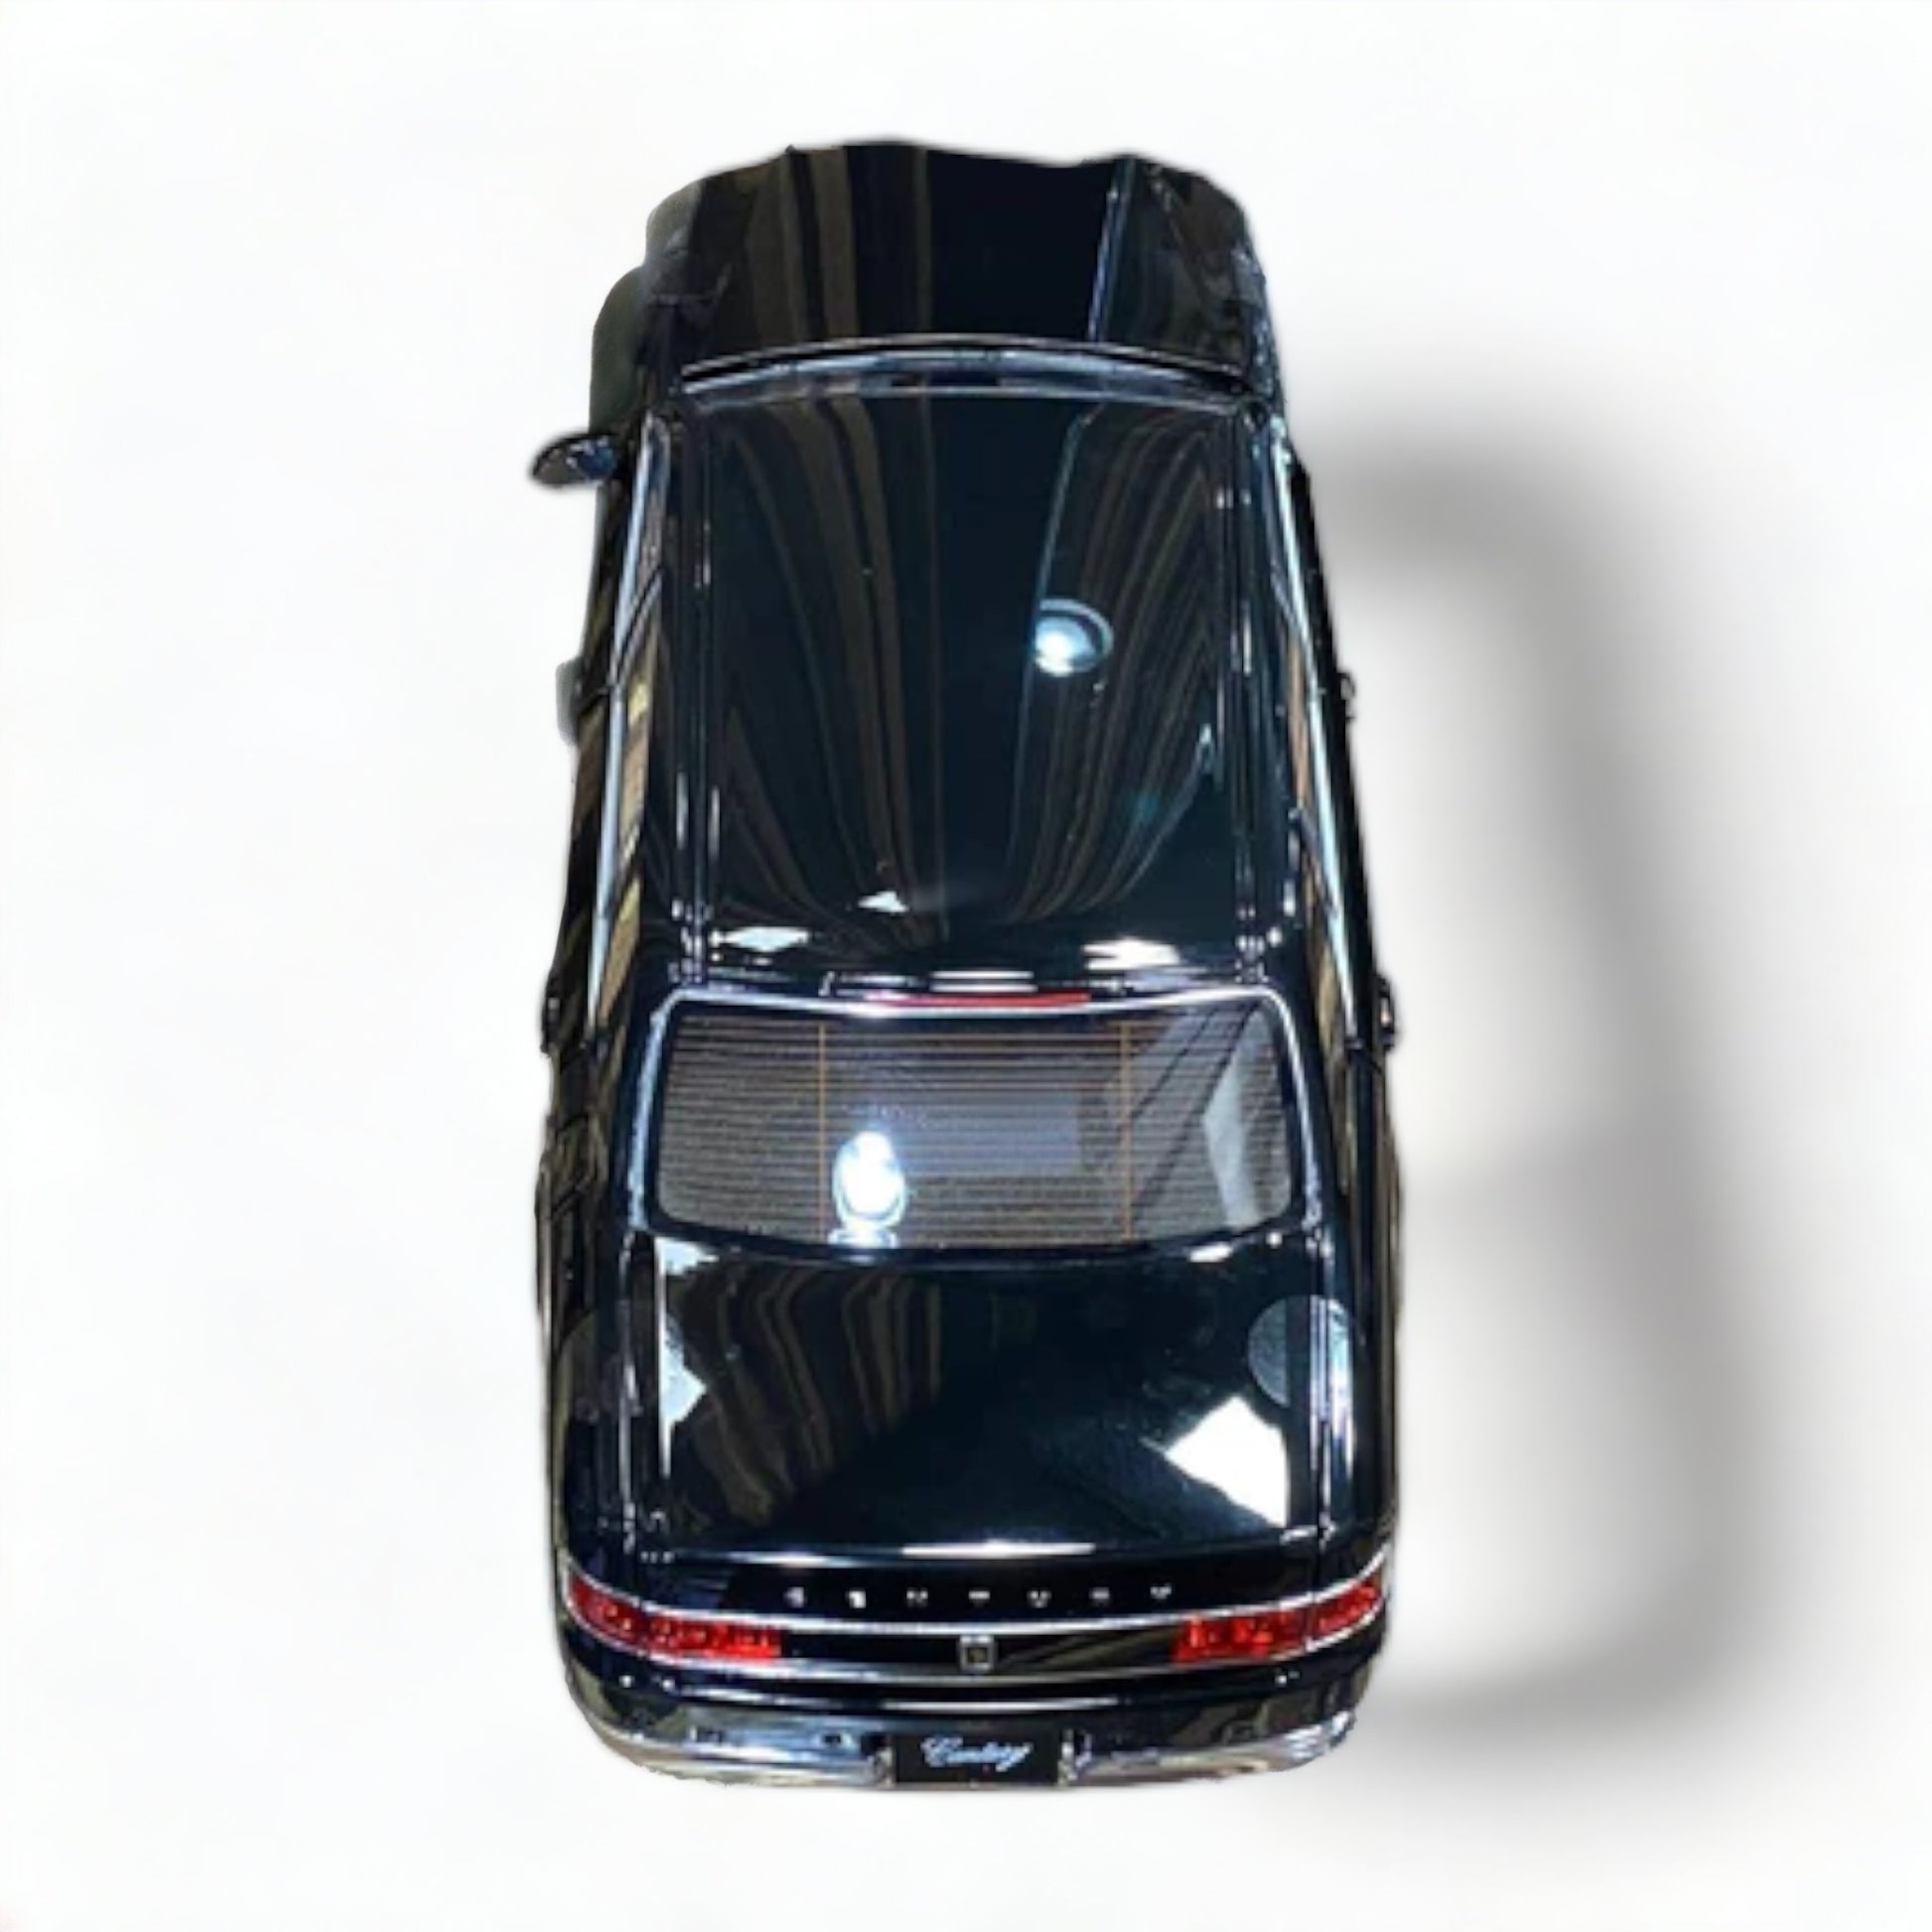 1/18 Toyota Century Black 2018 Black by LCD Scale Model Car no|Sold in Dturman.com Dubai UAE.